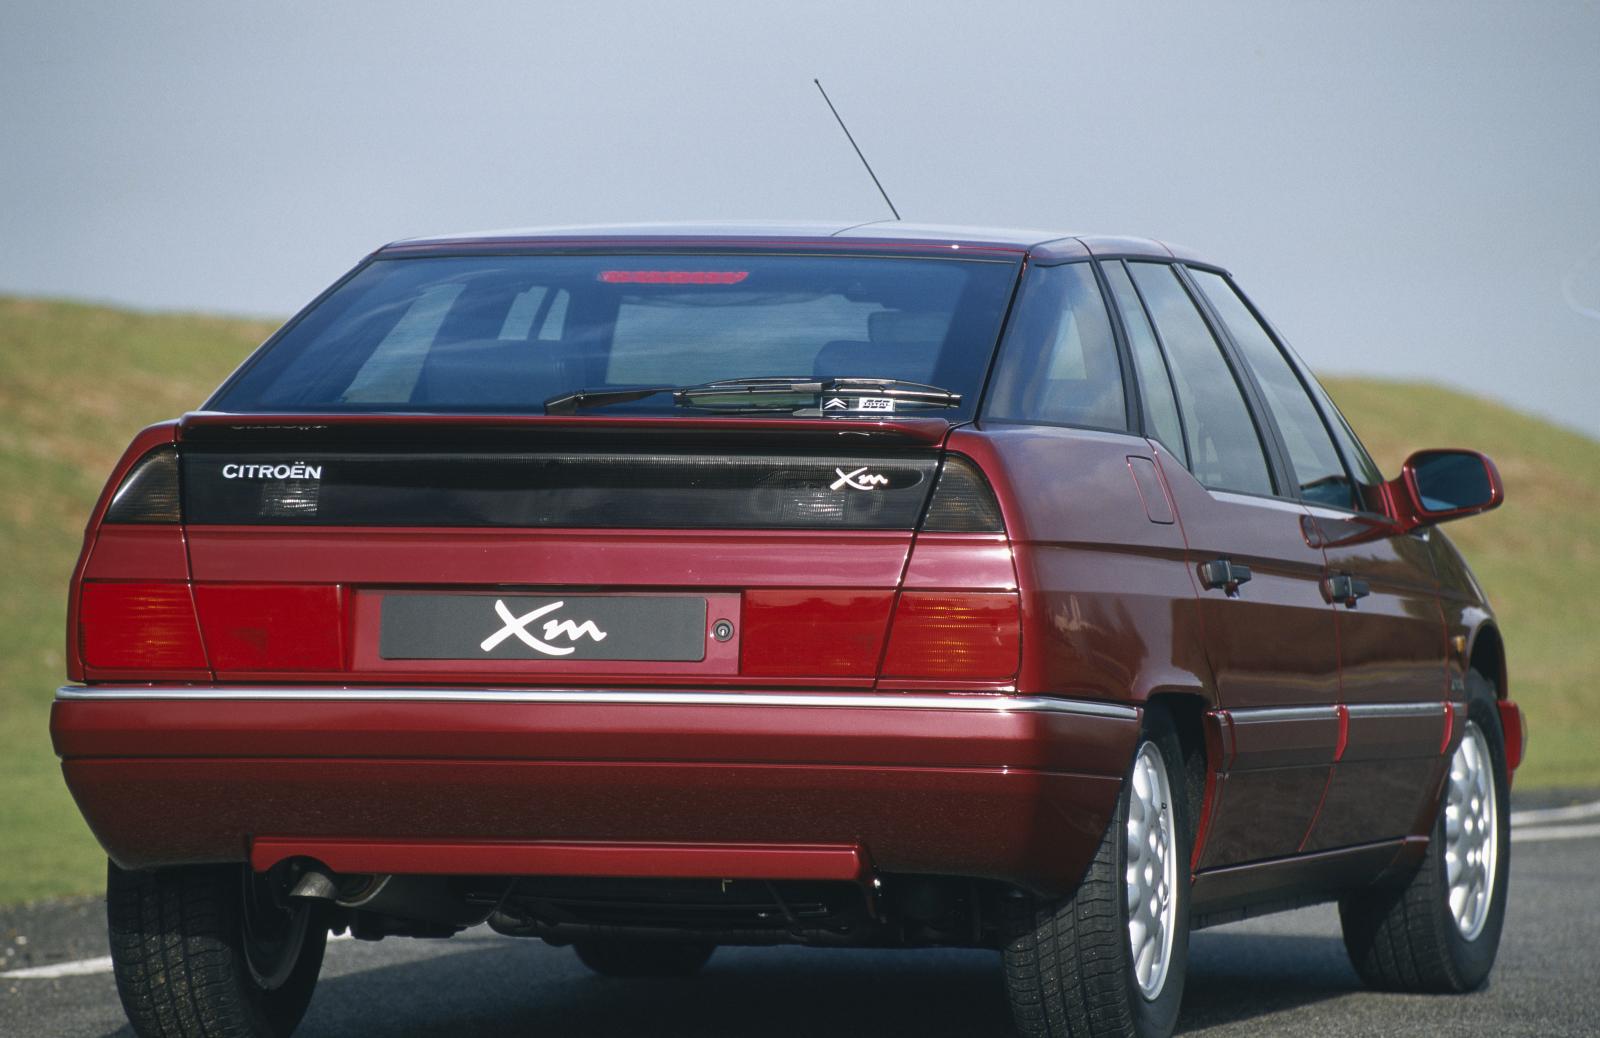 XM Multimedia 1998 rear view